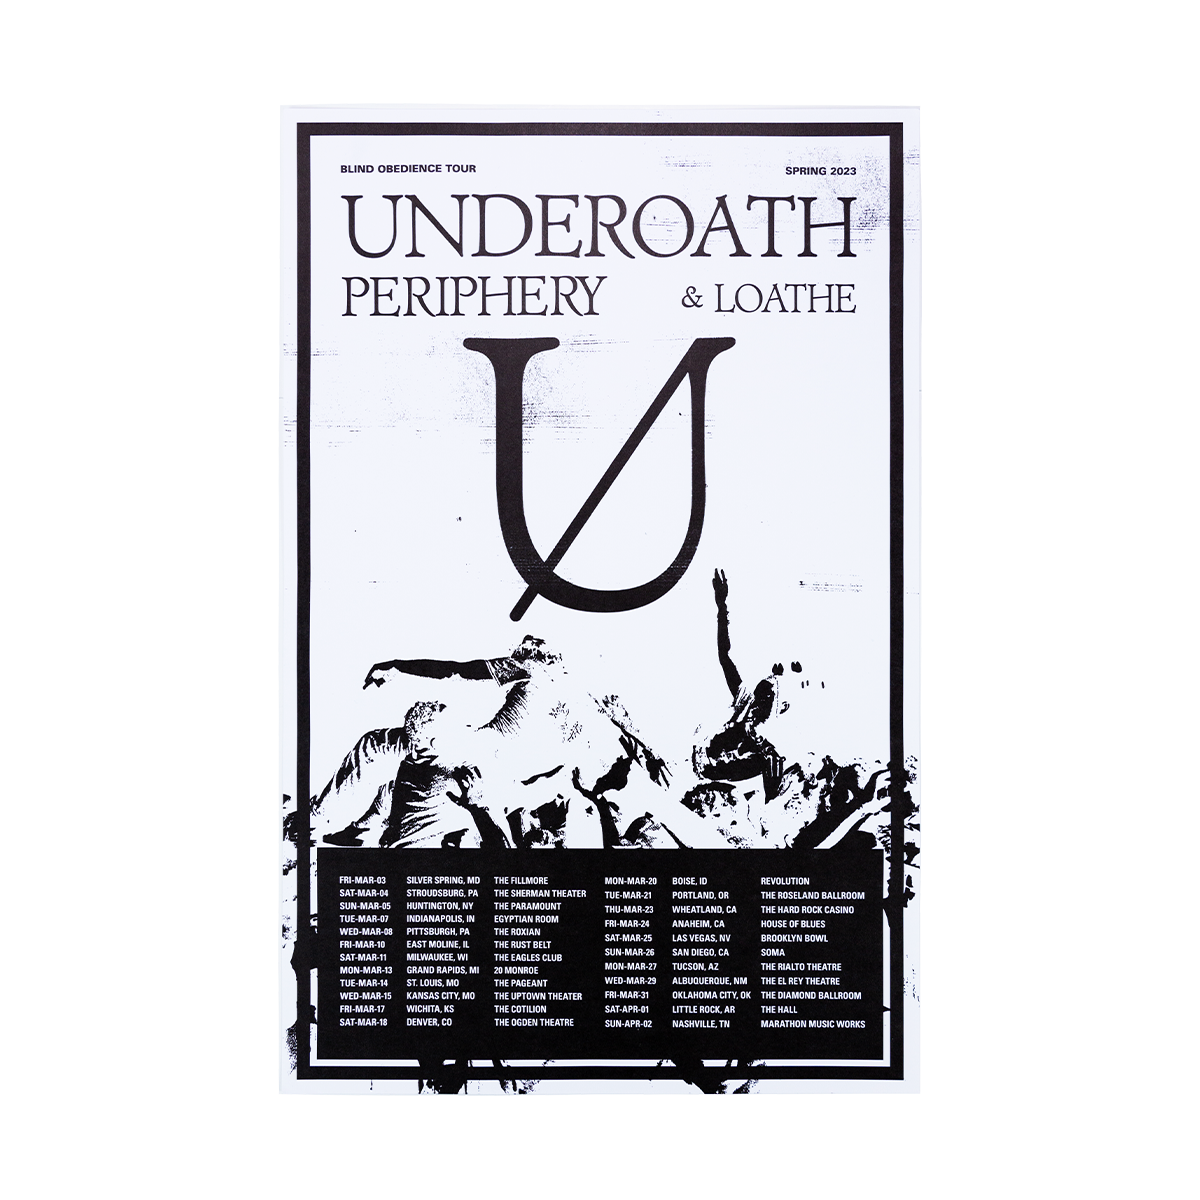 underoath blind obedience tour setlist